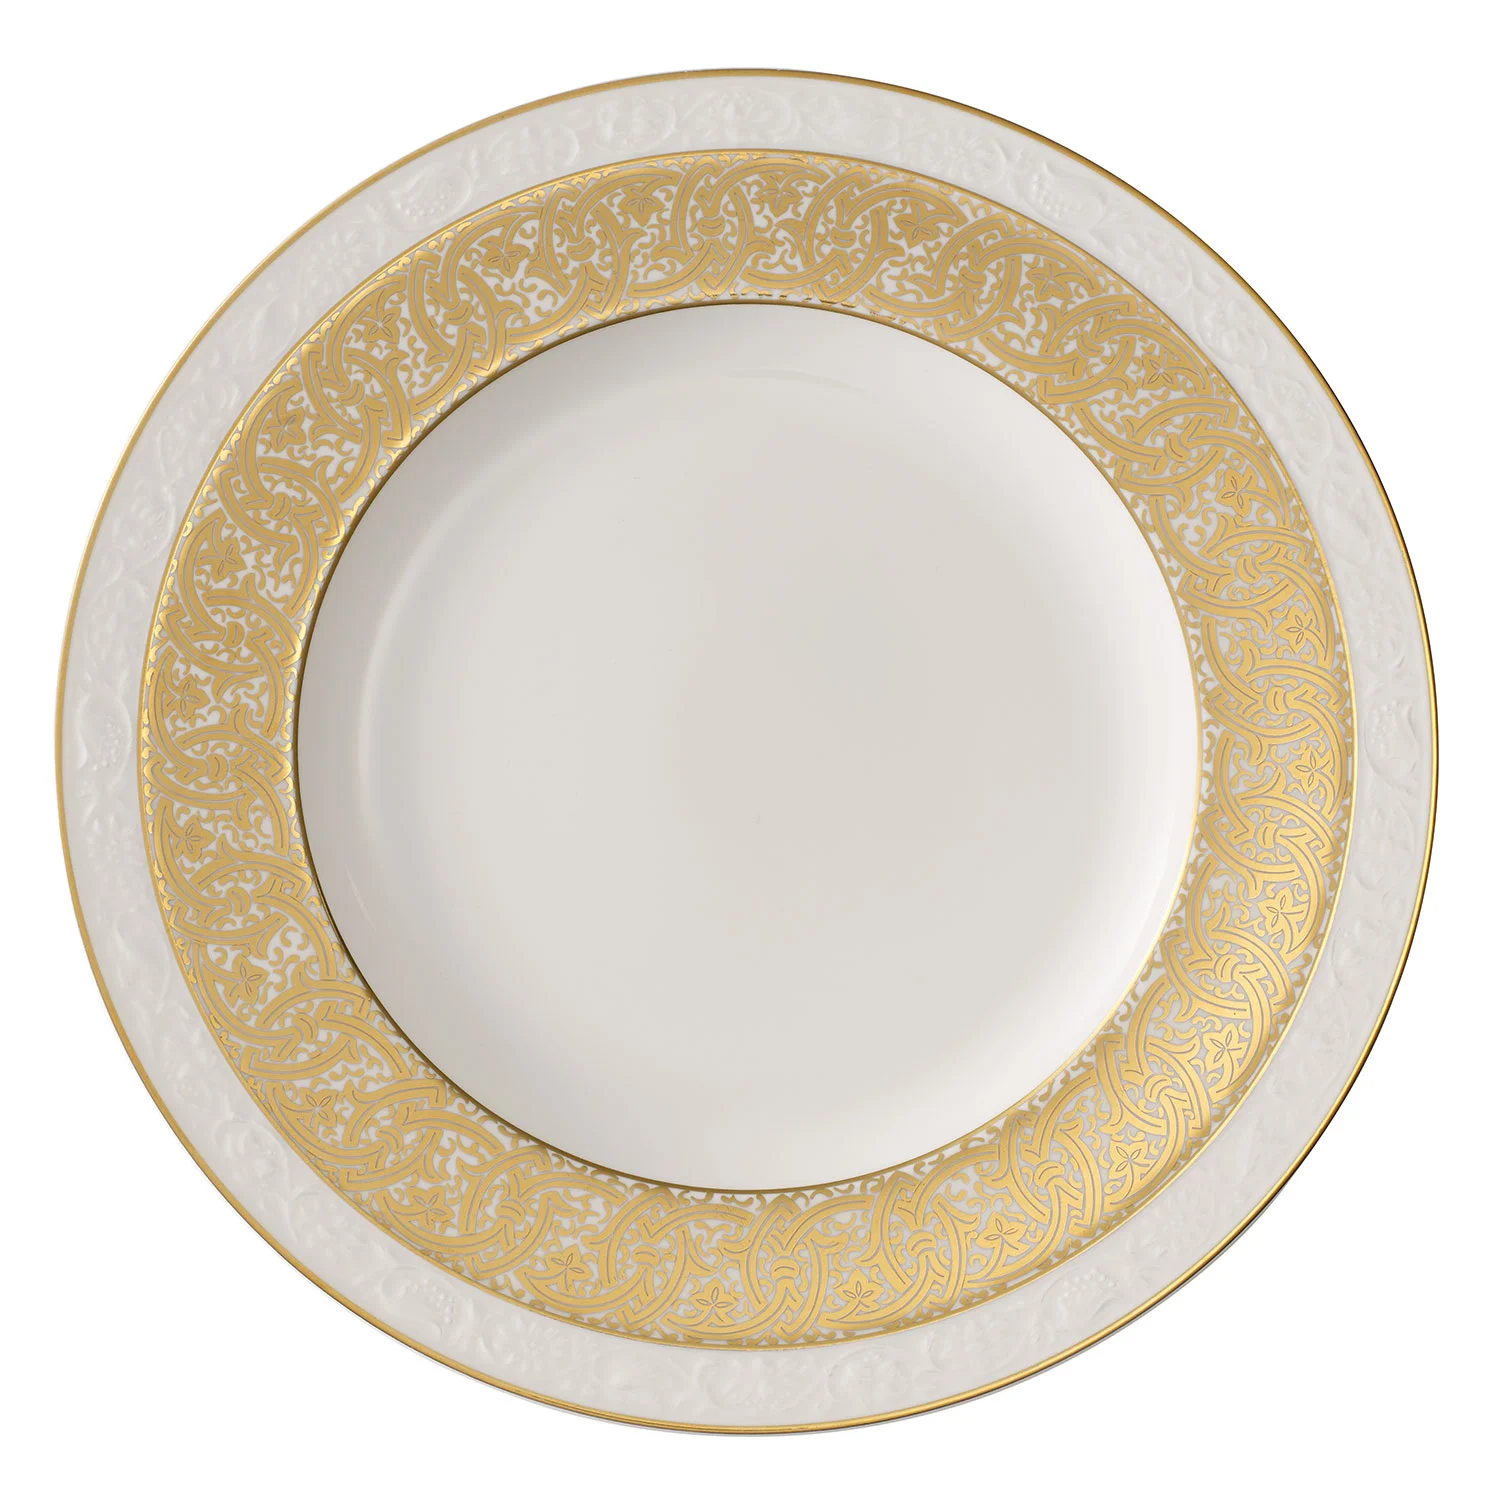 Golden Oasis Плоская тарелка 27 см